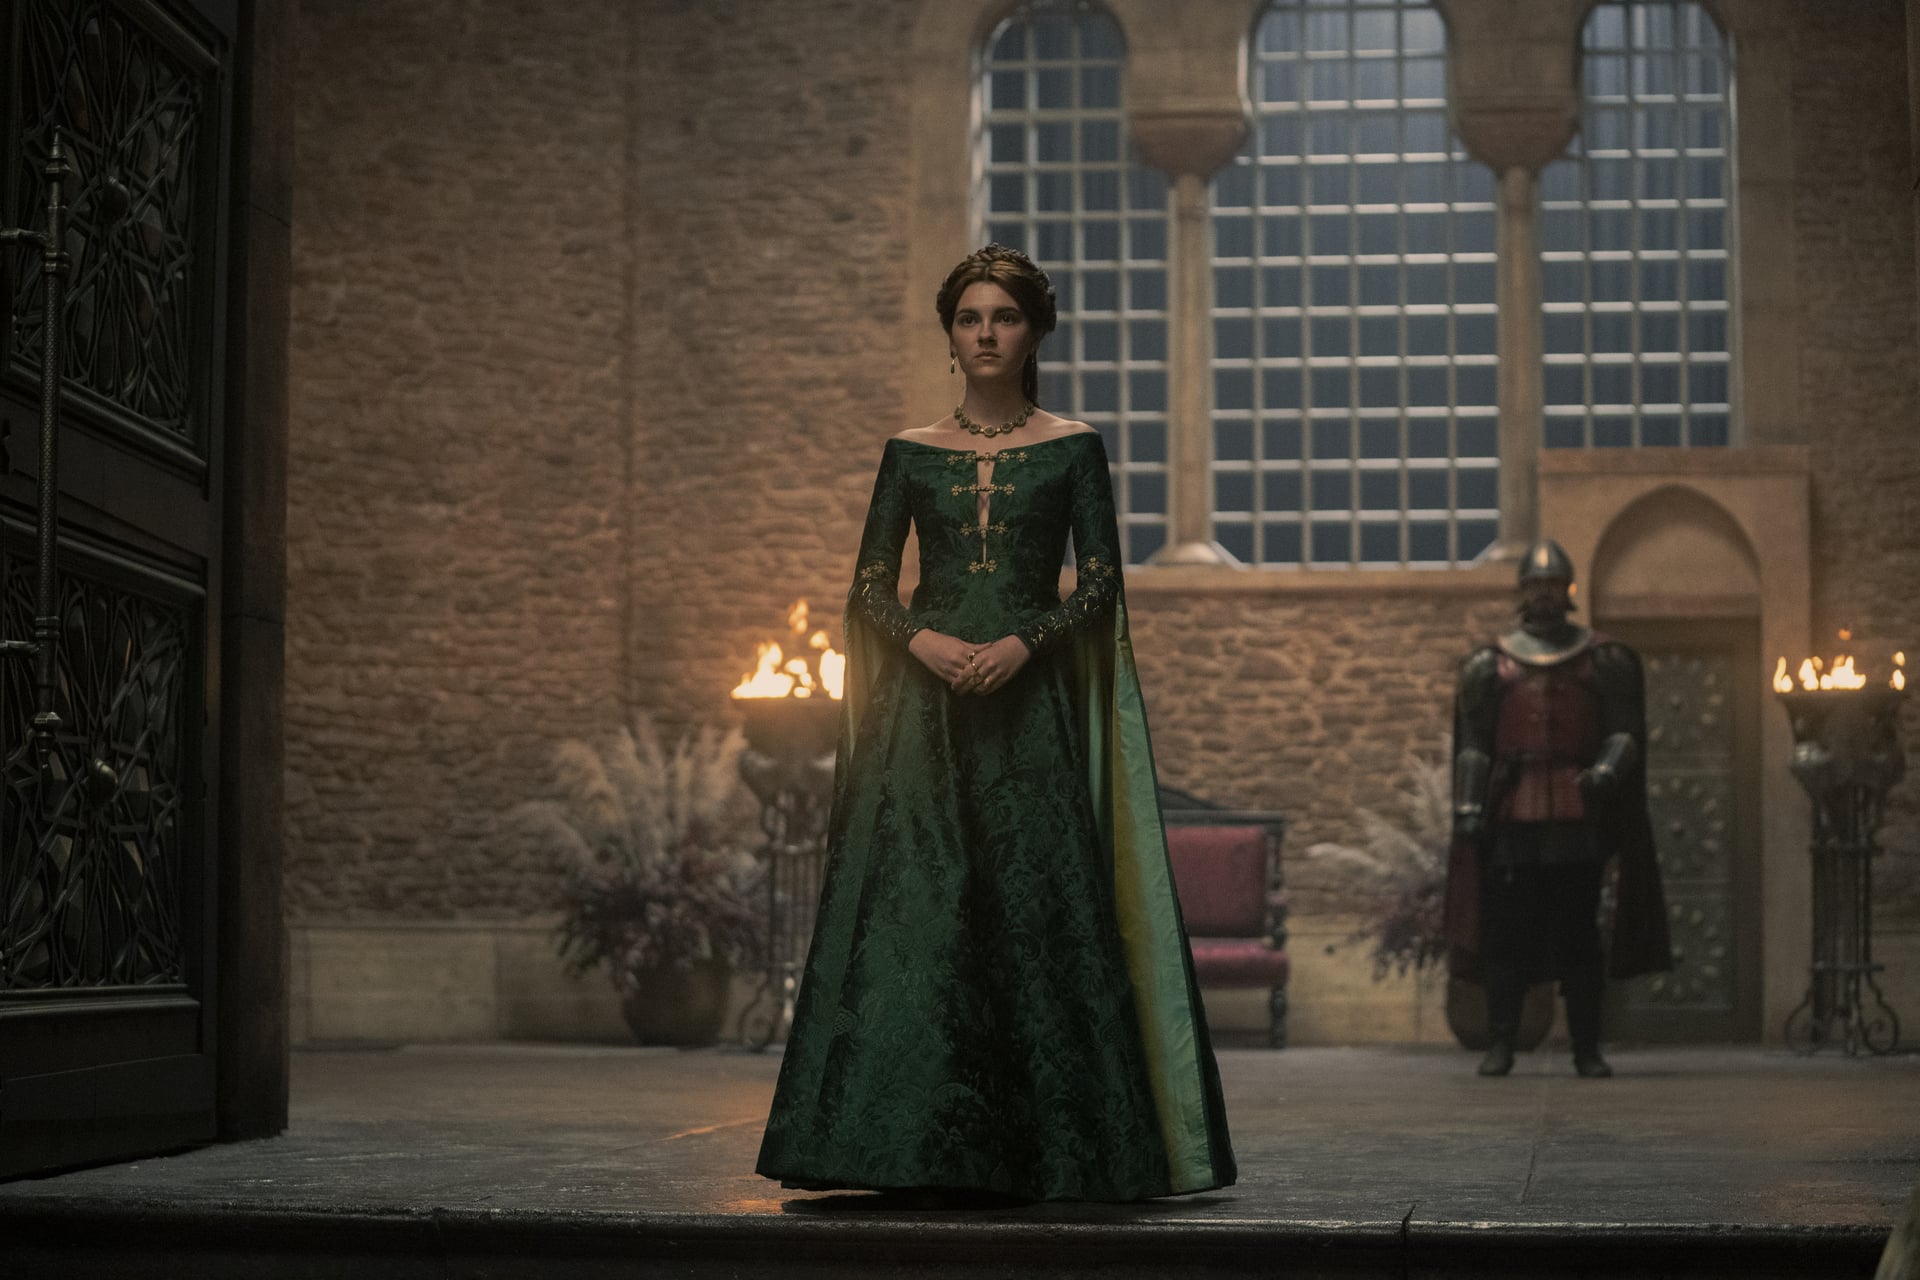 Emily Carey as Queen Alicent in her green dress